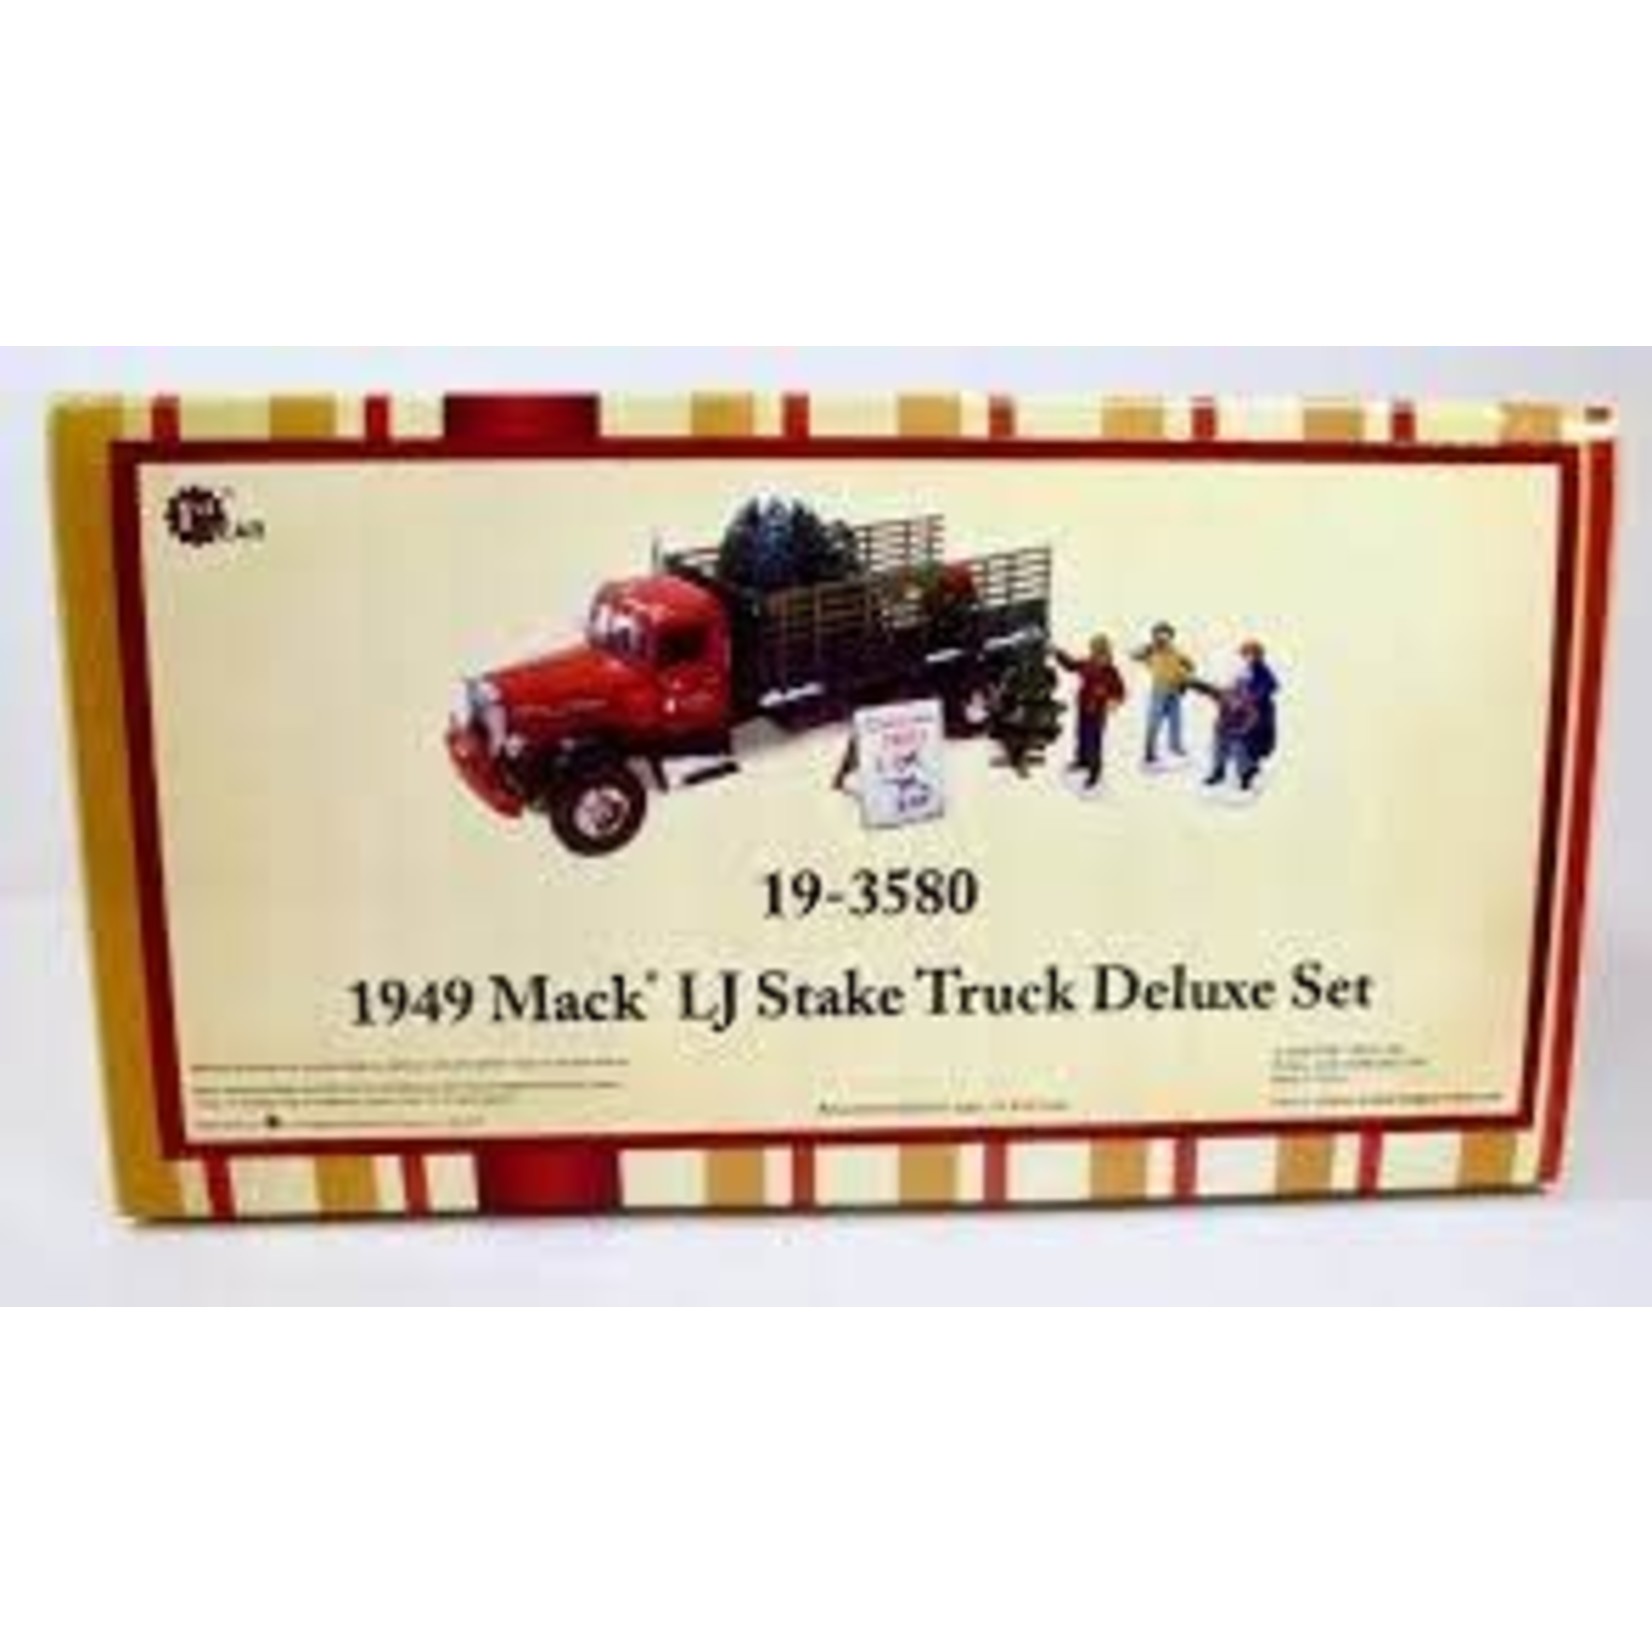 1949 Mack LJ Stake Truck Deluxe